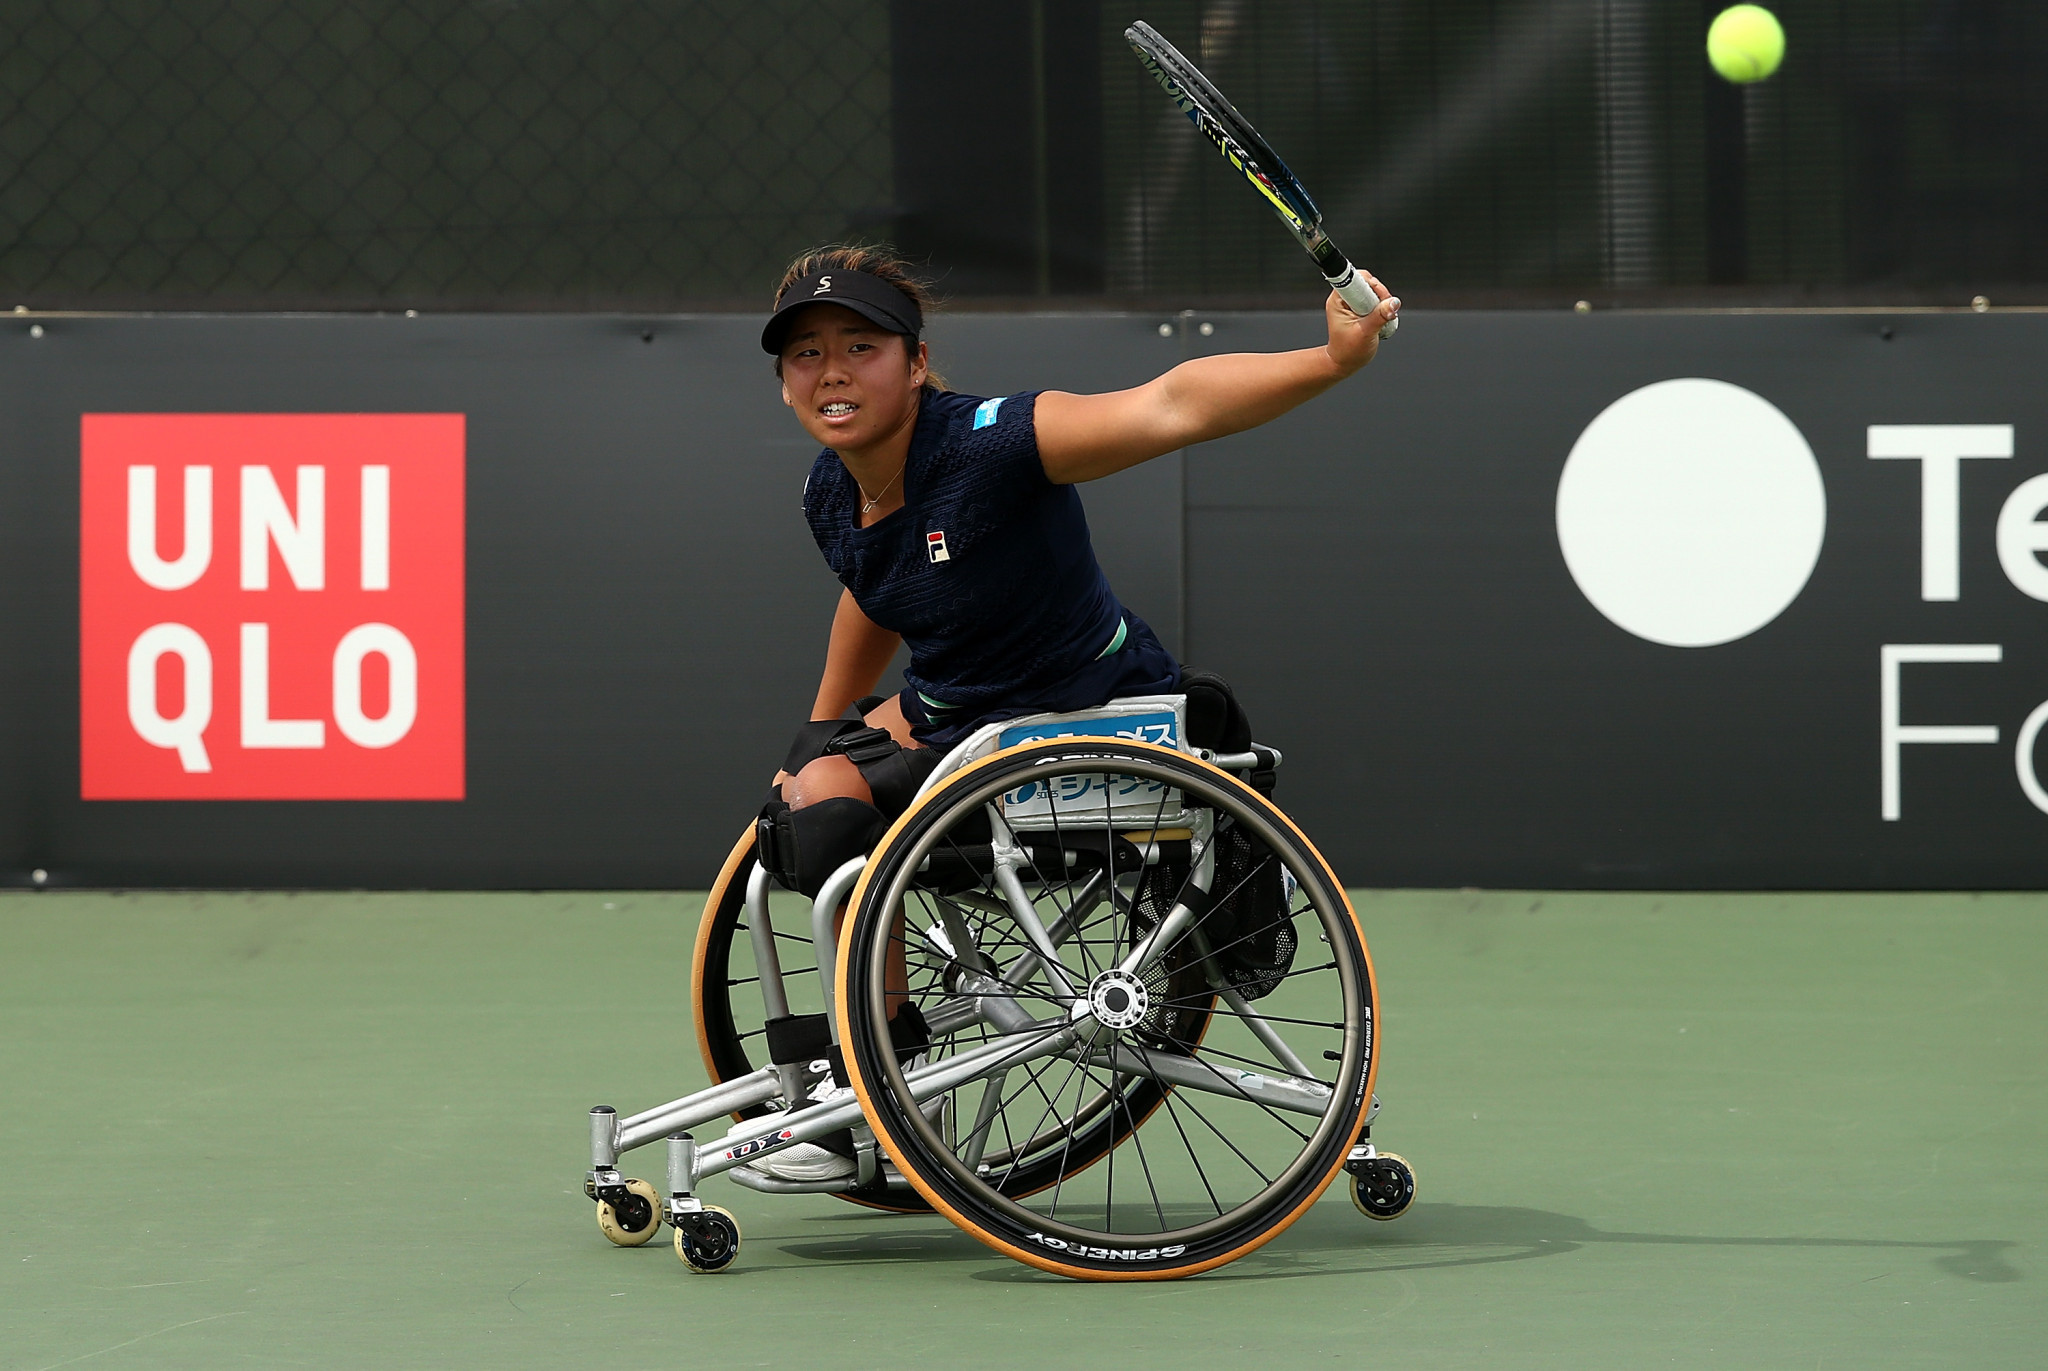 Wimbledon stars among draw for 2018 British Open Wheelchair Tennis Championships